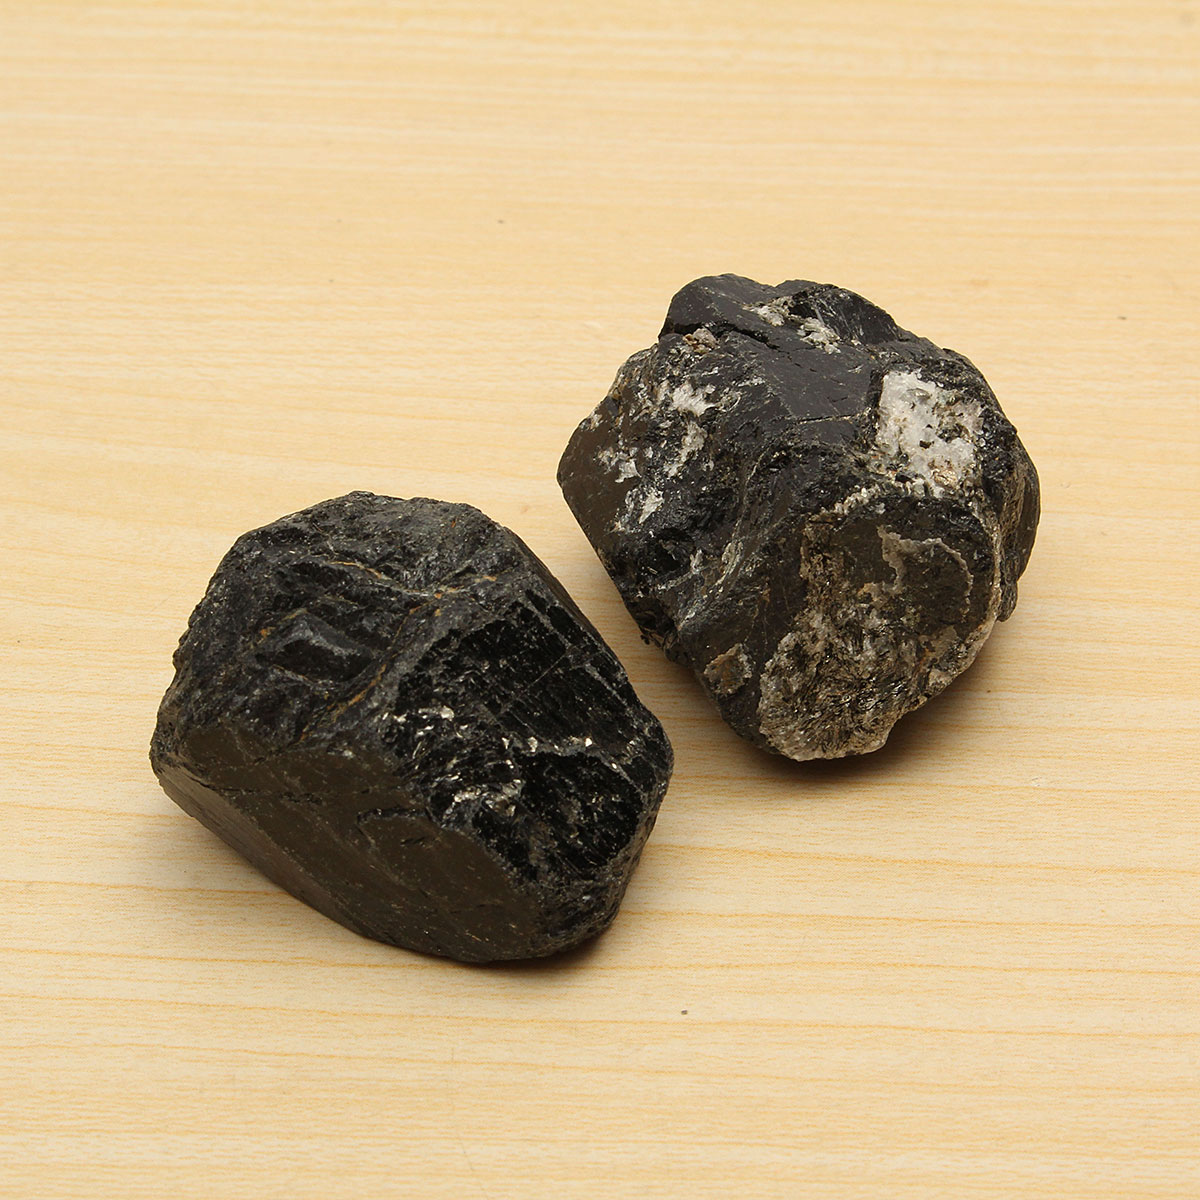 100g-Black-Natural-Rough-Tourmaline-Quartz-Stone-Specimen-Healing-Gem-Accessories-1100658